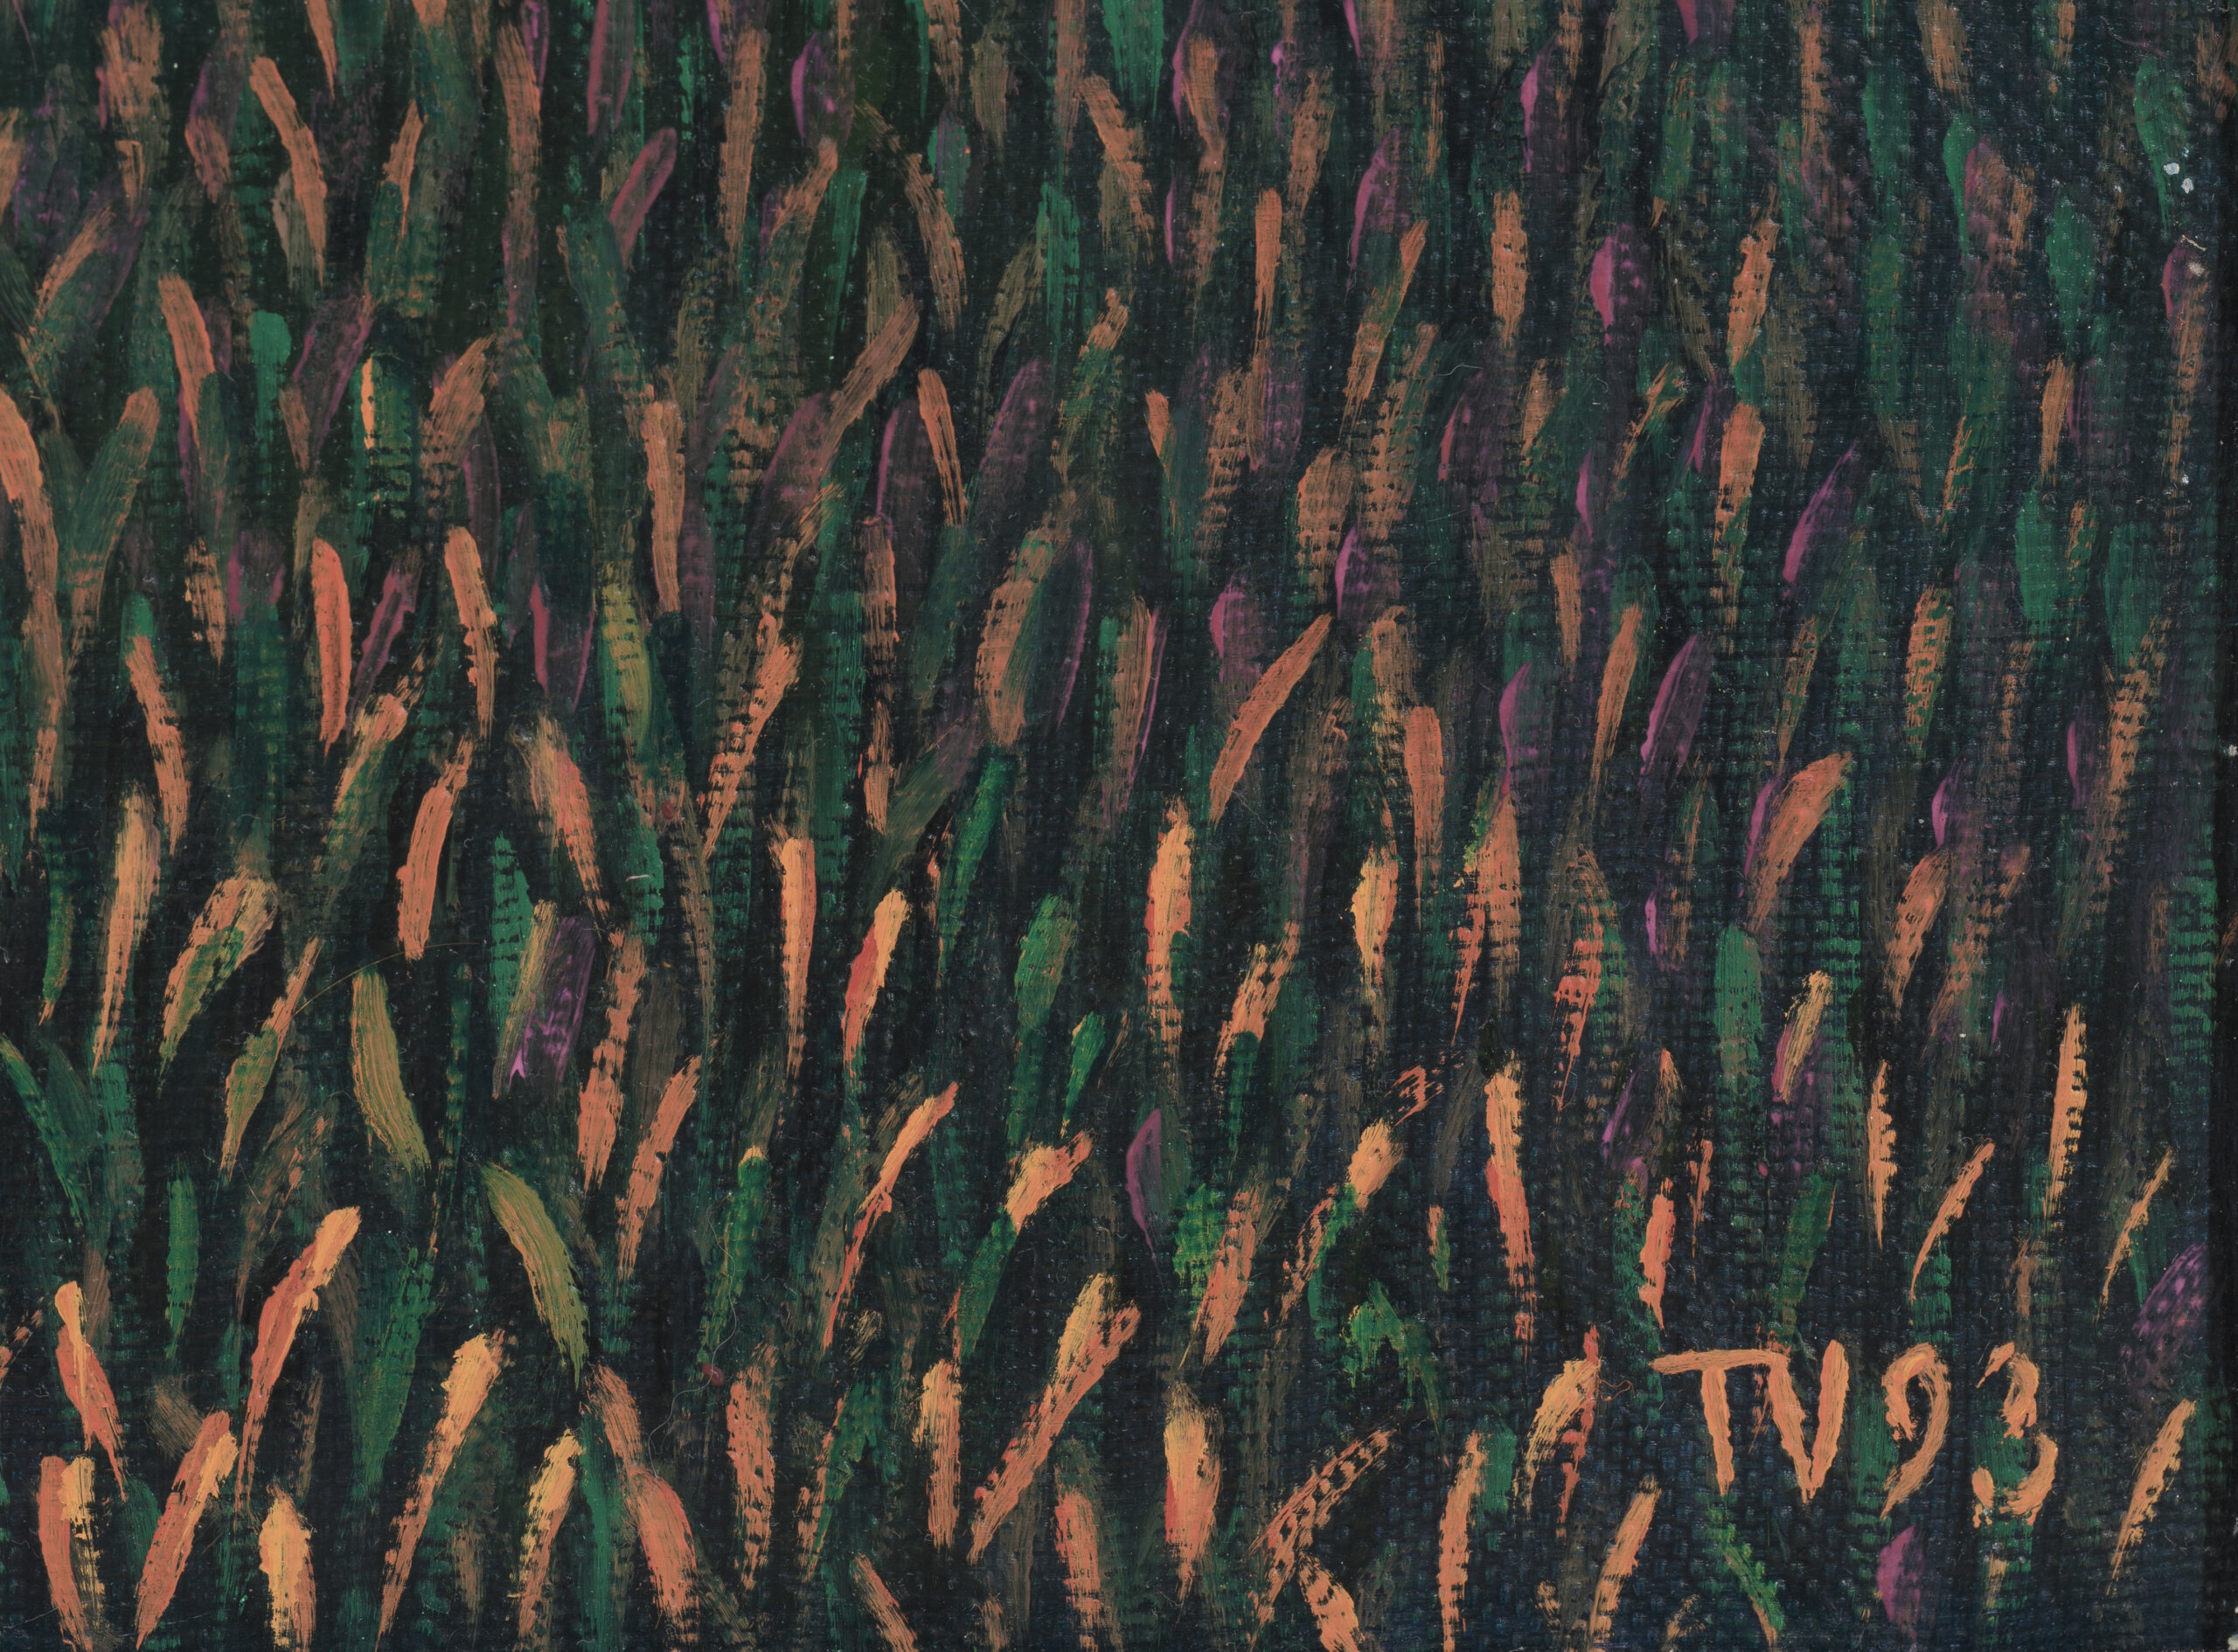 Toomas Vint “Lilled”, 1993. 105 x 100 cm.